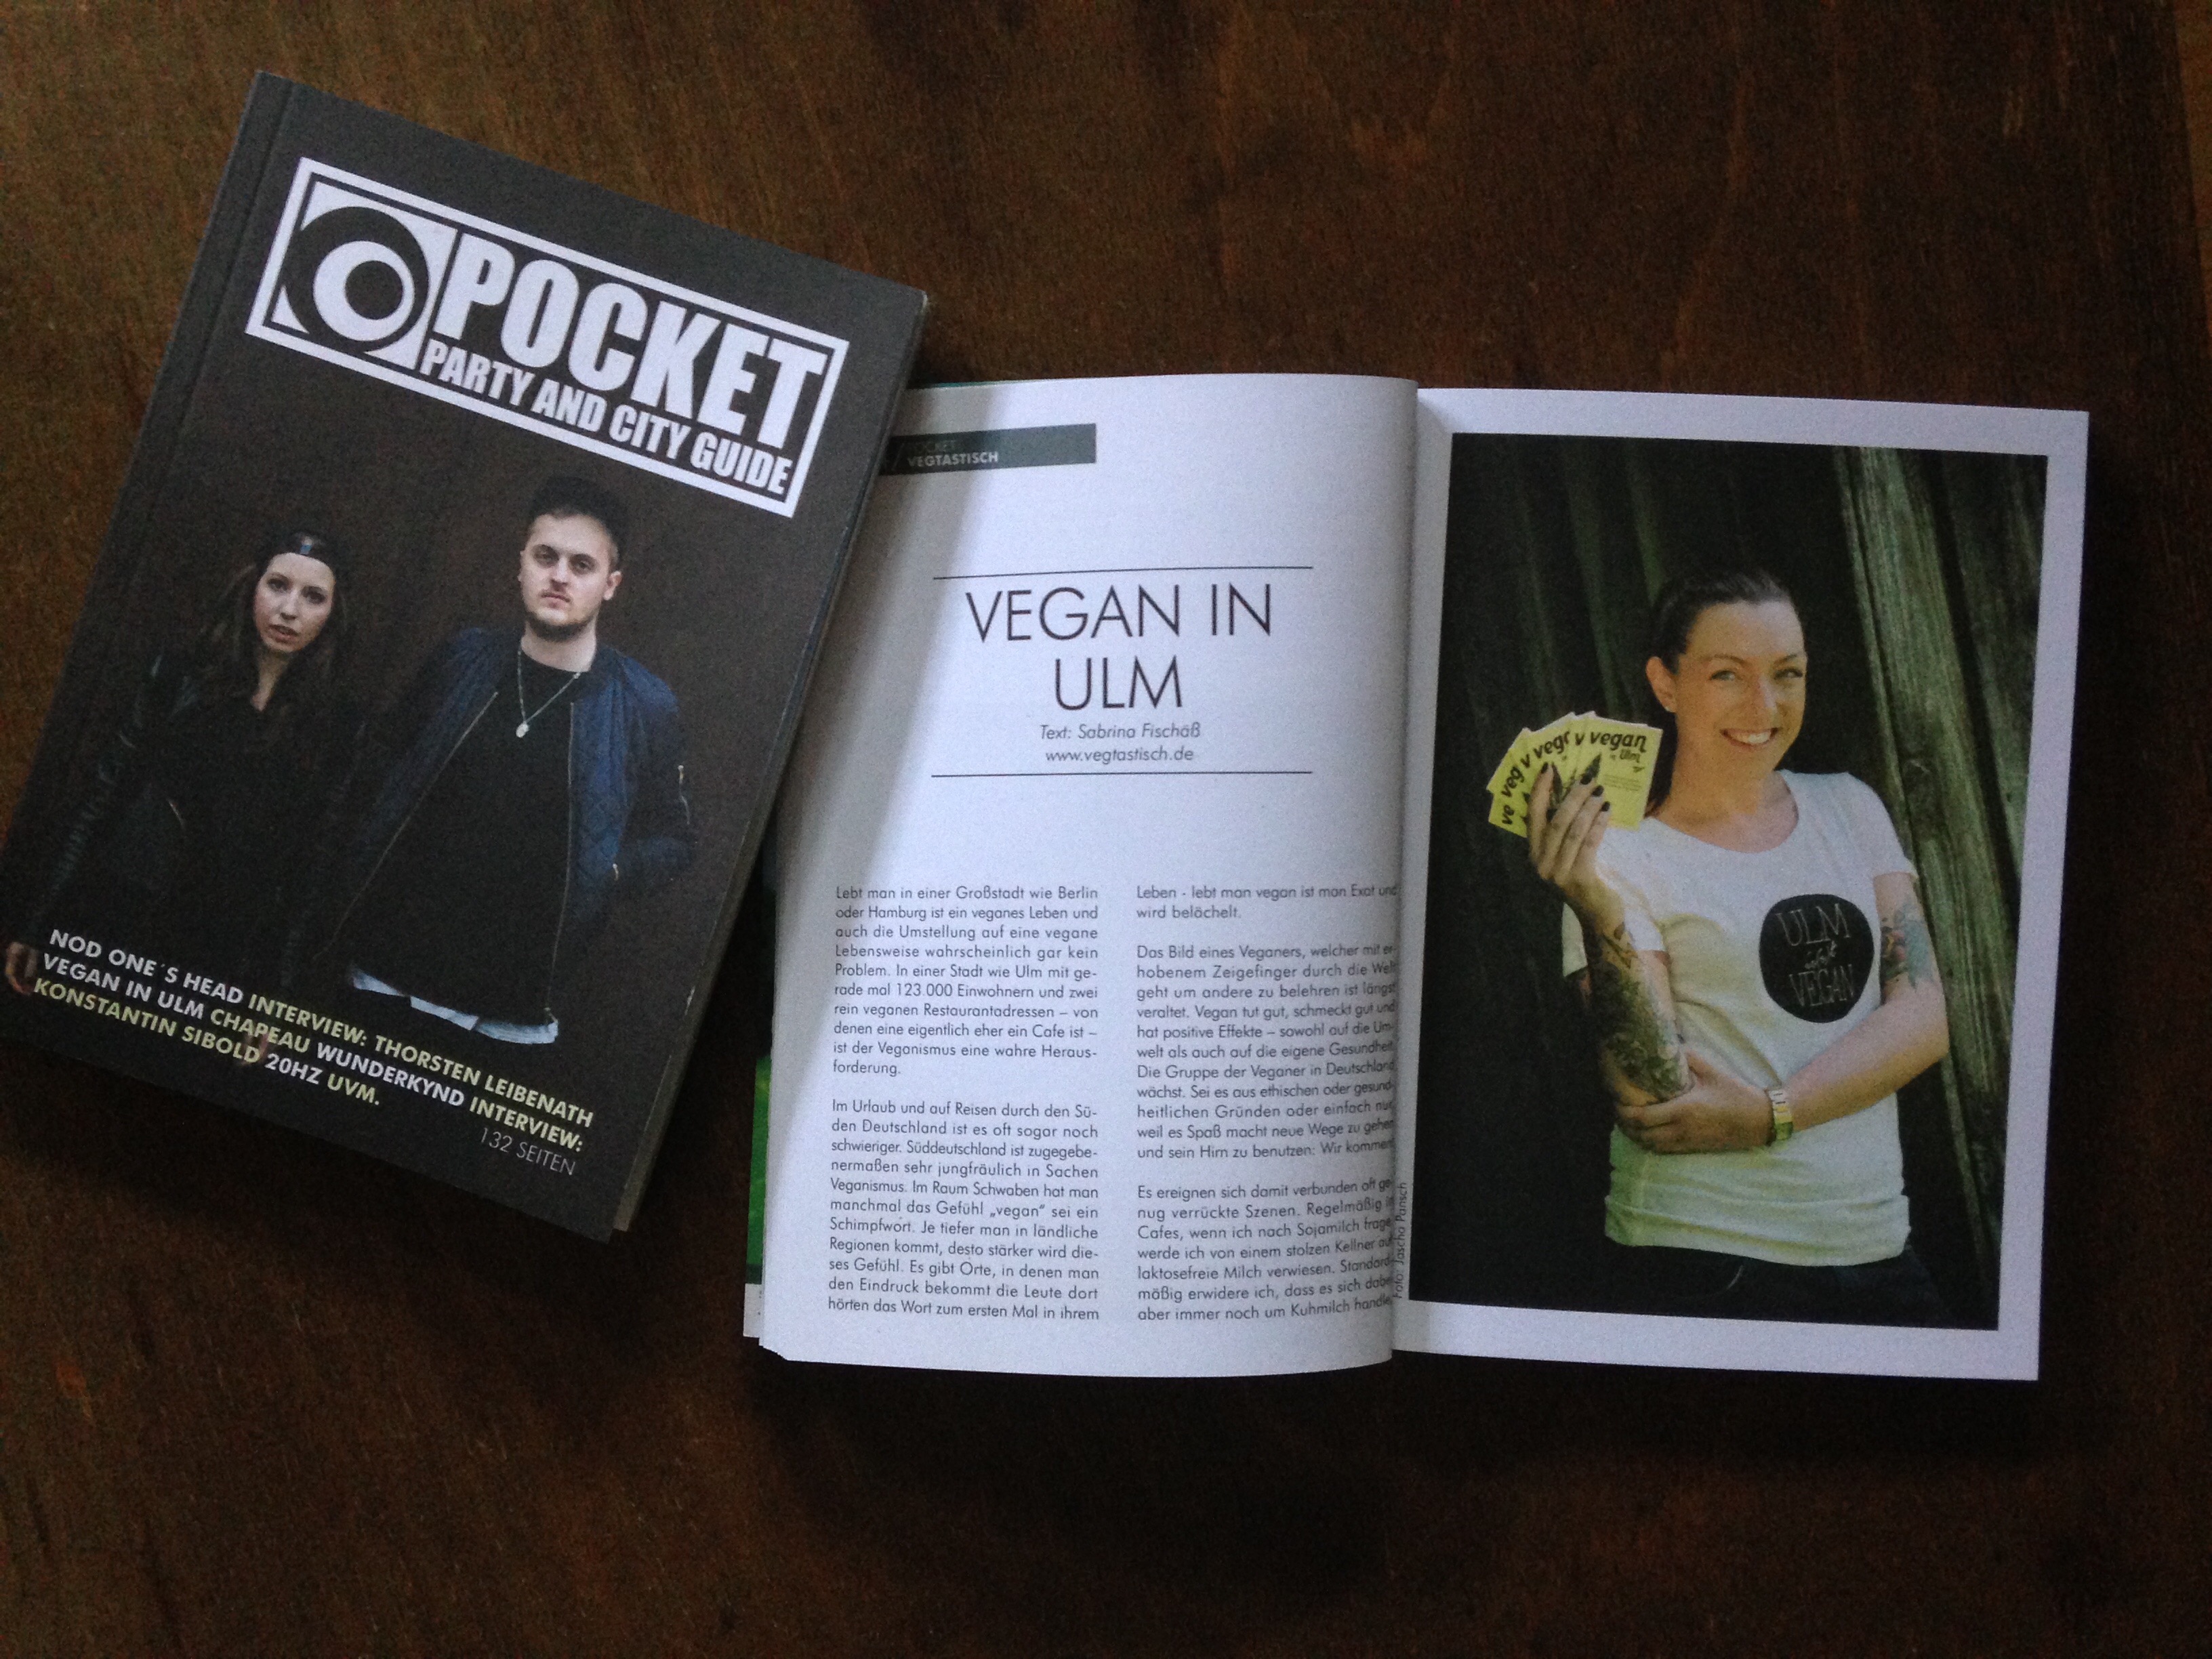 Kolumne im POCKET Magazin: “Vegan in Ulm”